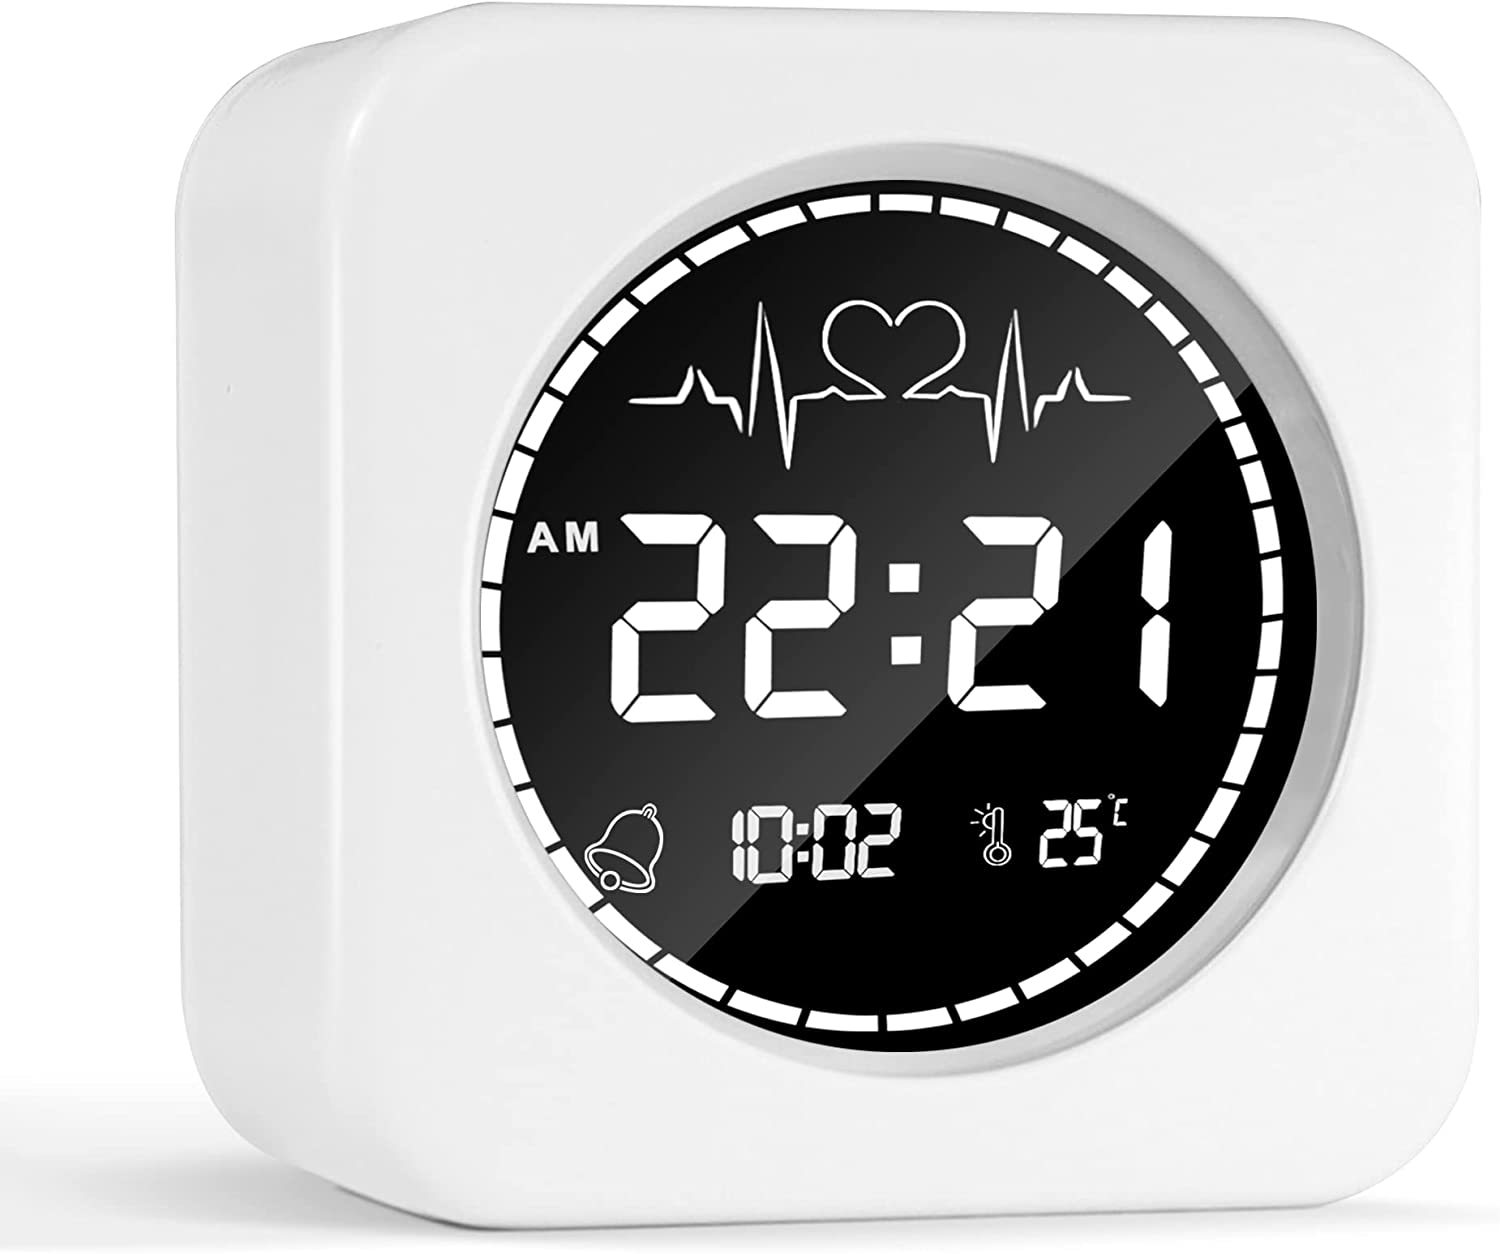 Heartbeat Animation Digital Travel Alarm Clock